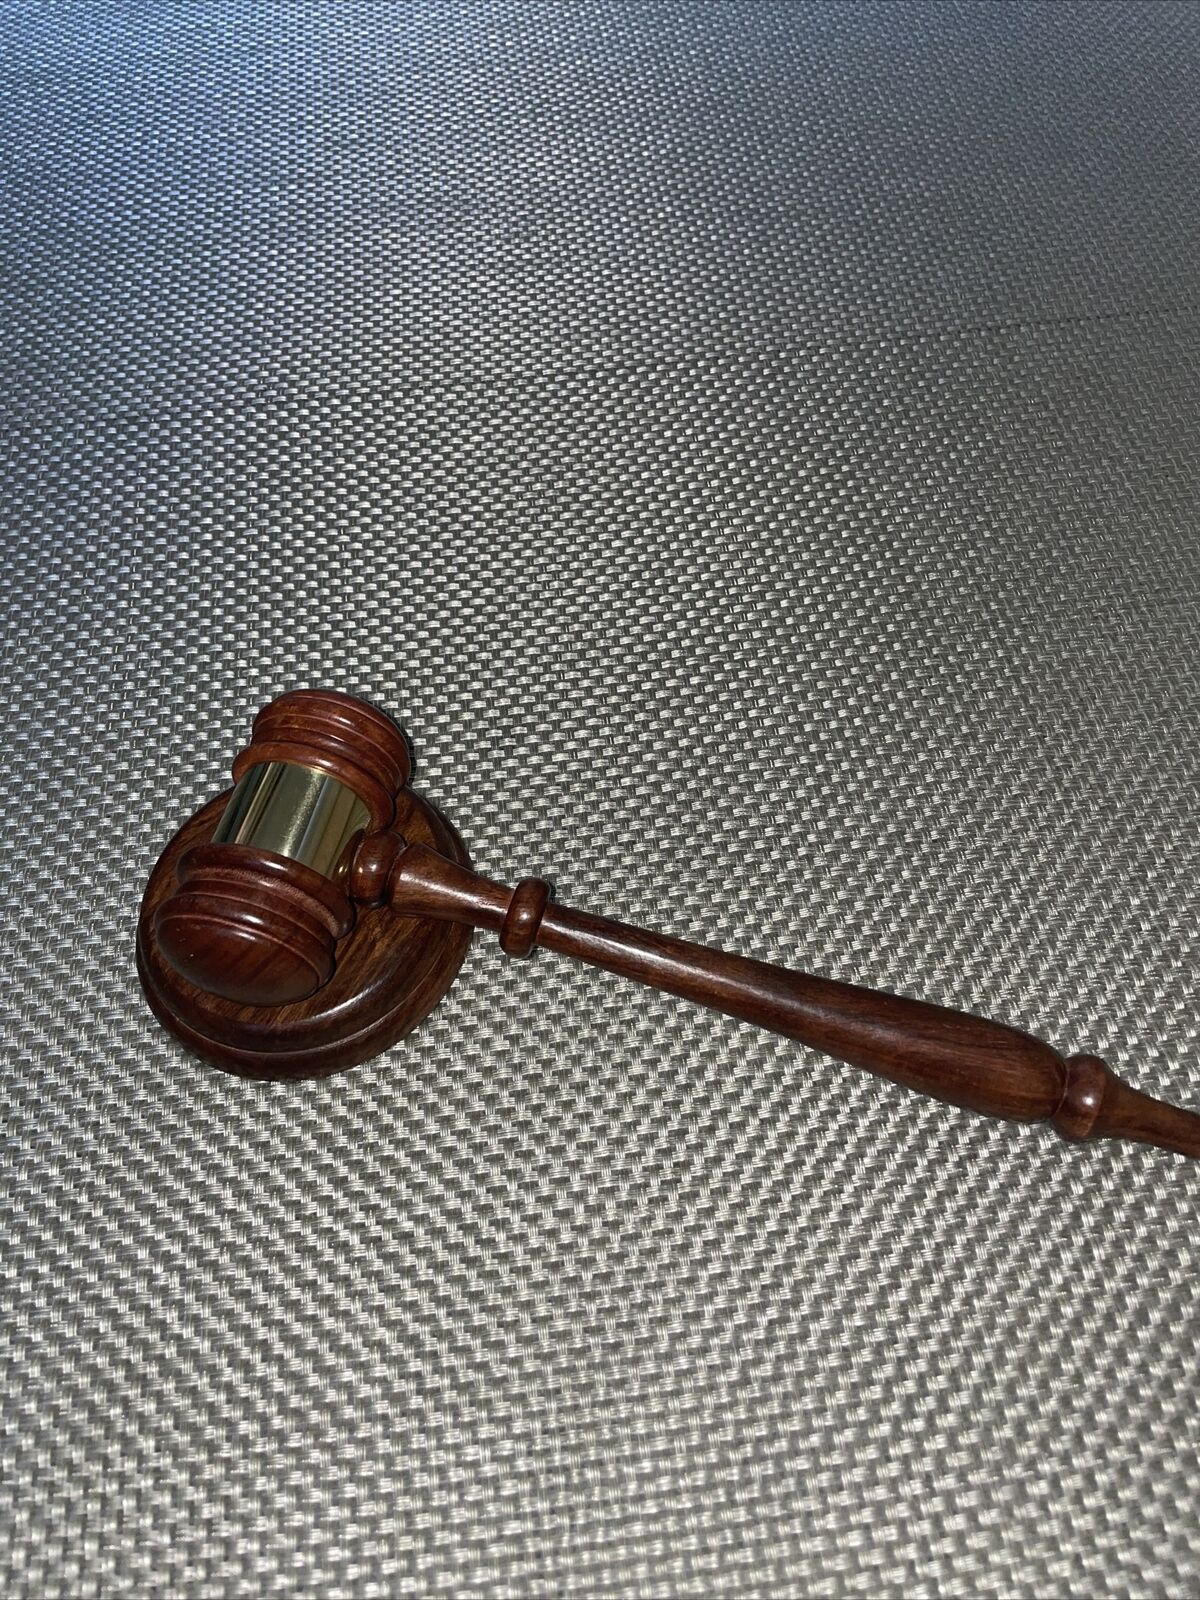 Wooden Handcrafted gavel Hammer Hardwood Gavel+Sound Block lawyer Judge Auction